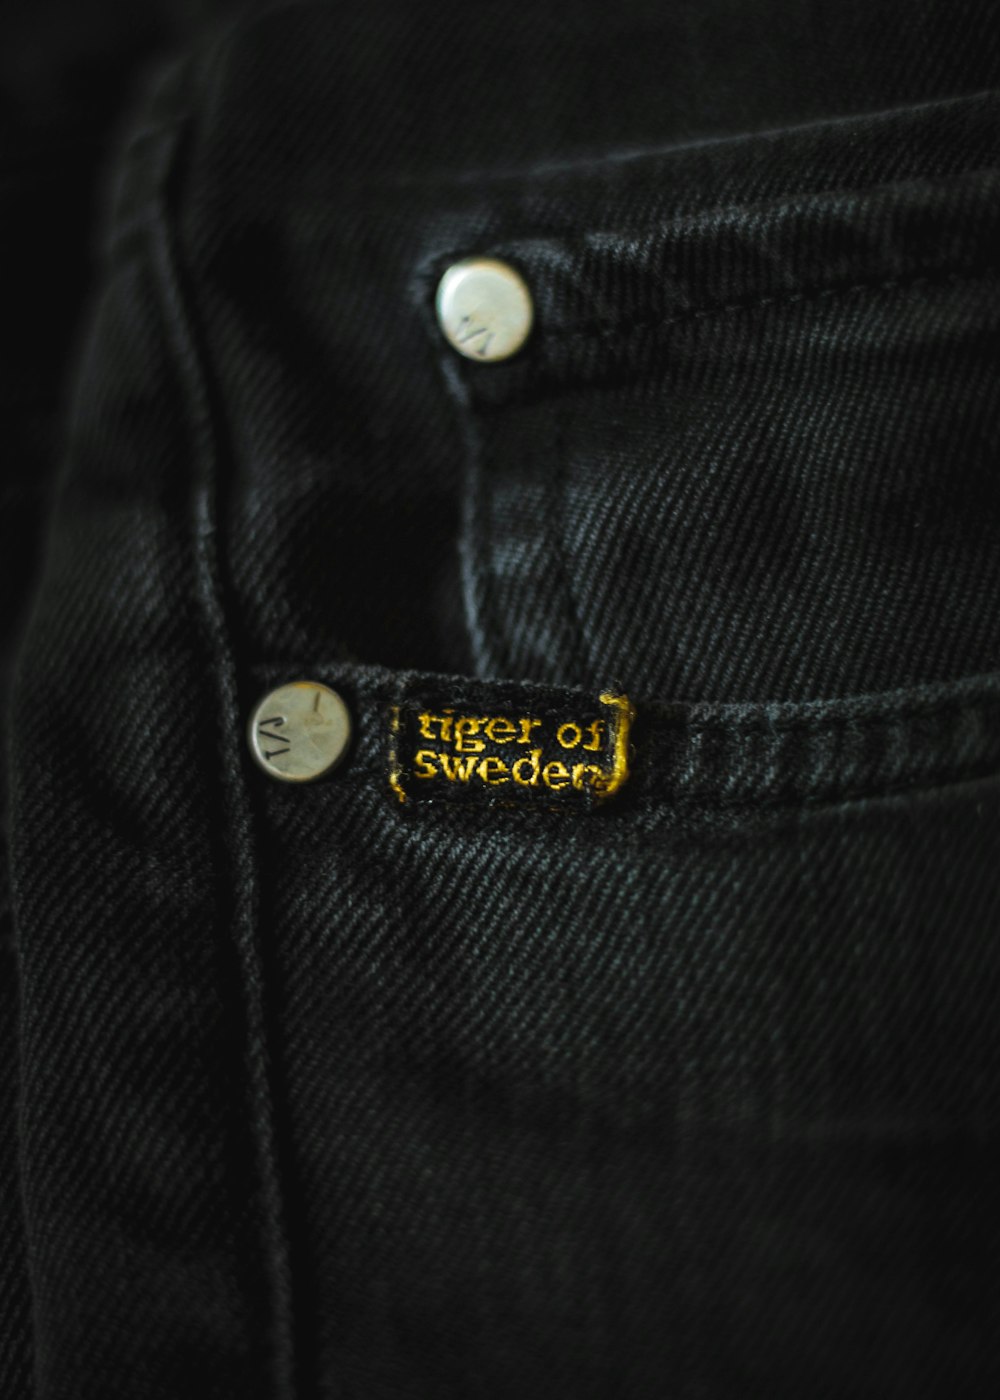 black levis denim bottoms photo – Free Jeans Image on Unsplash